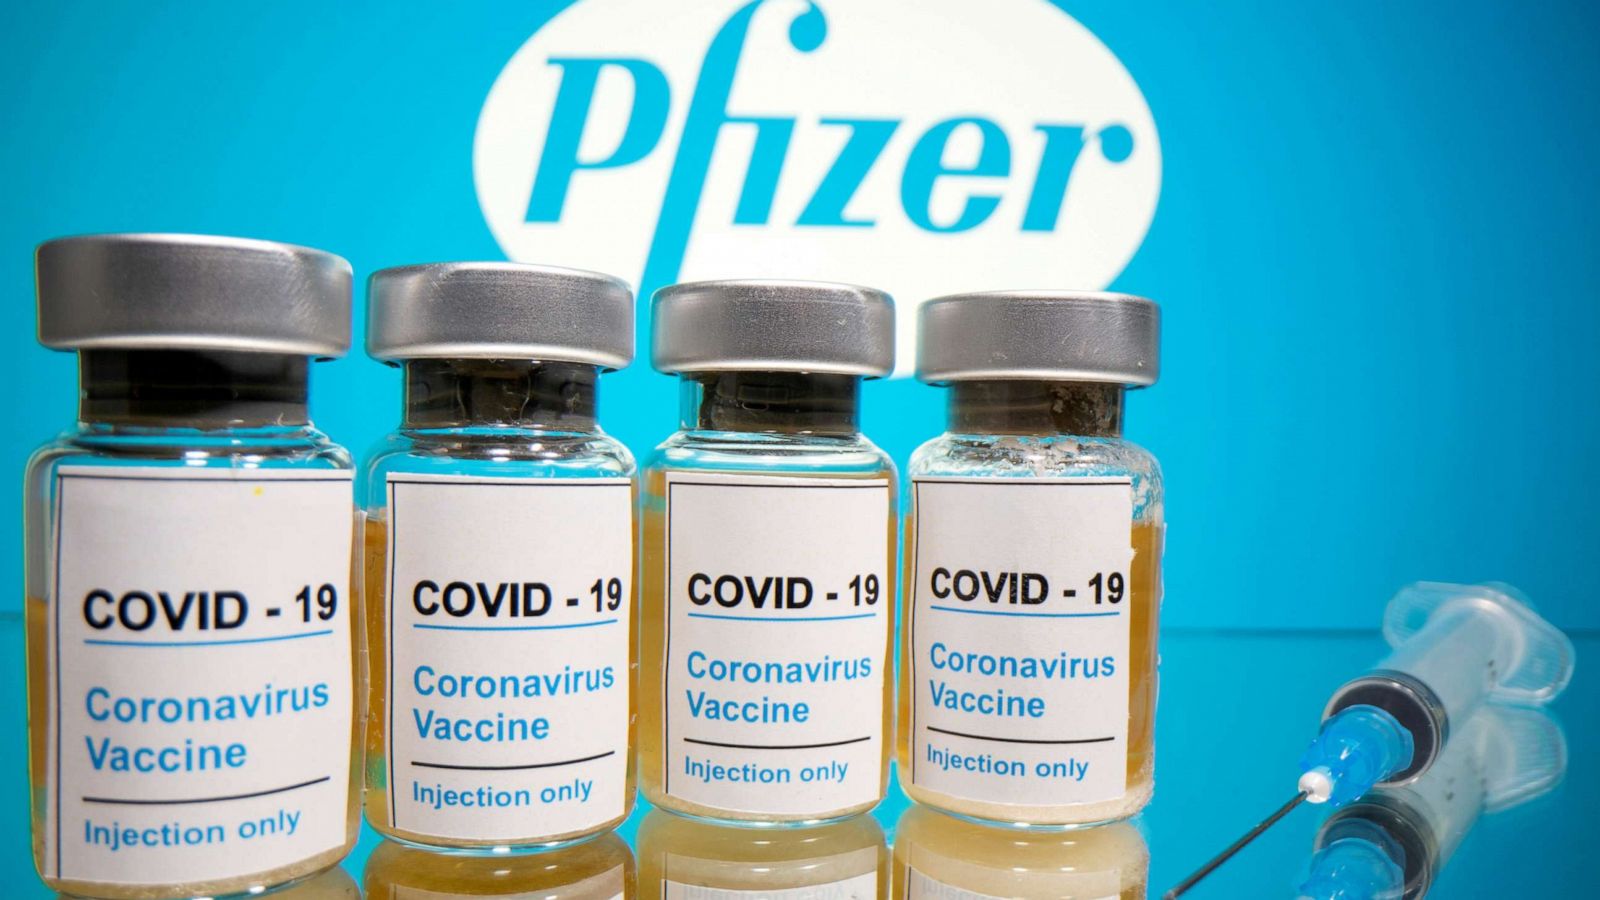 Does Pfizer make a COVID vaccine?